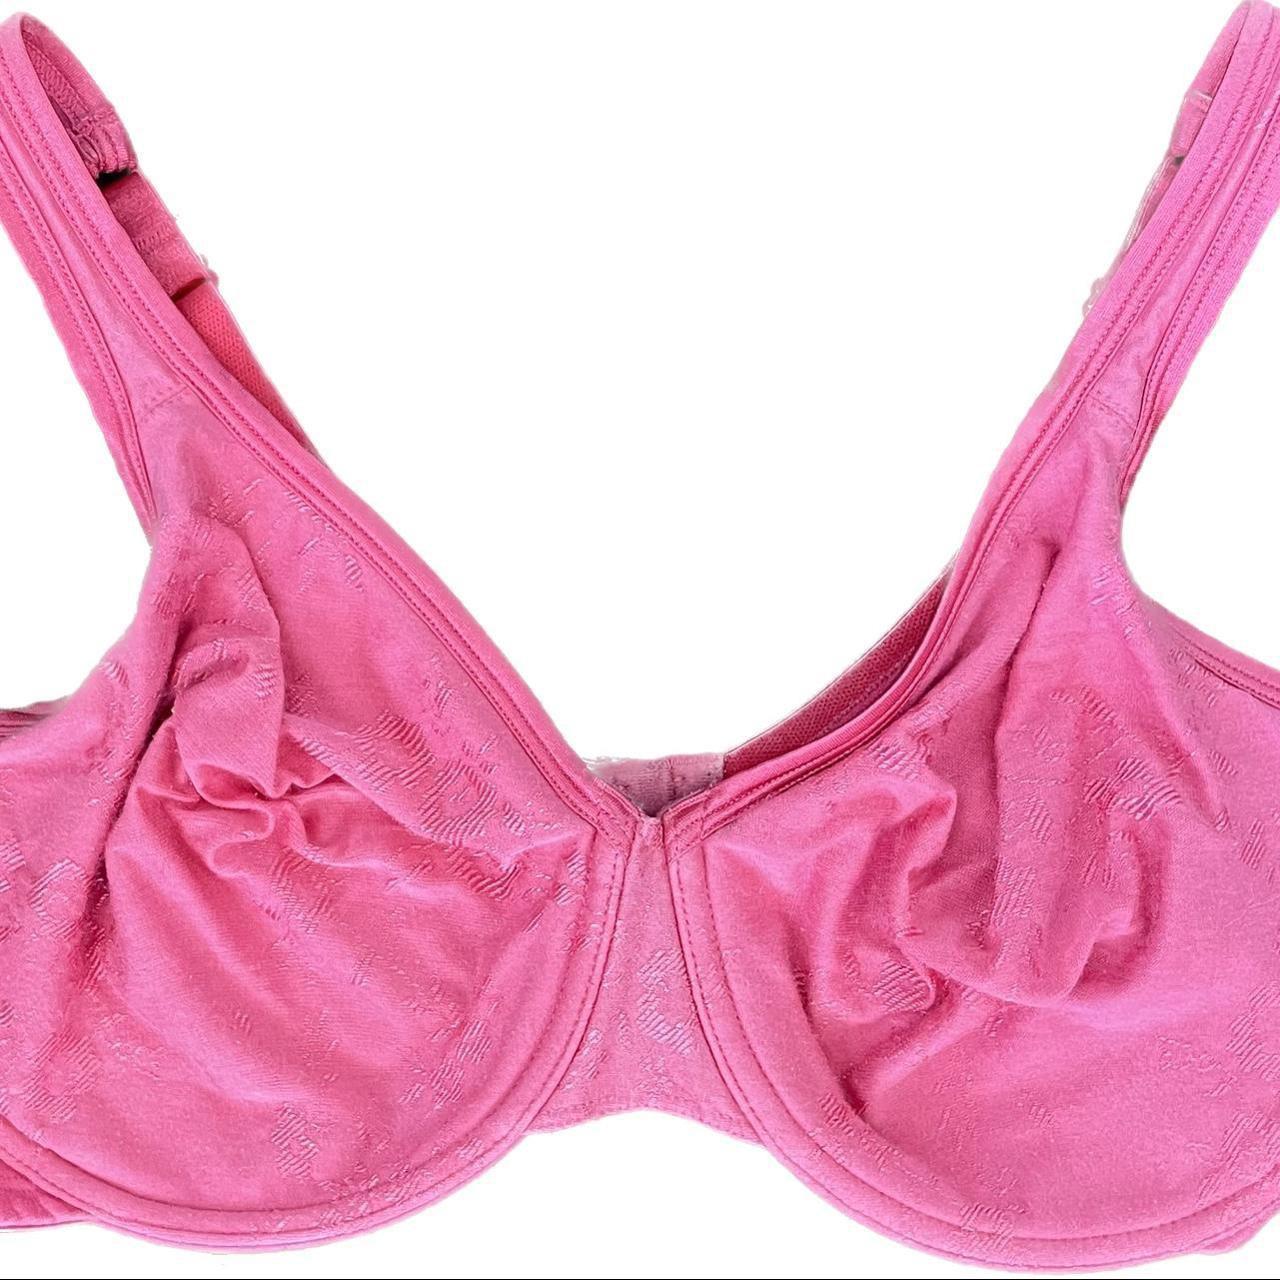 Vintage pink 38DD 90's bra! They just don't make - Depop